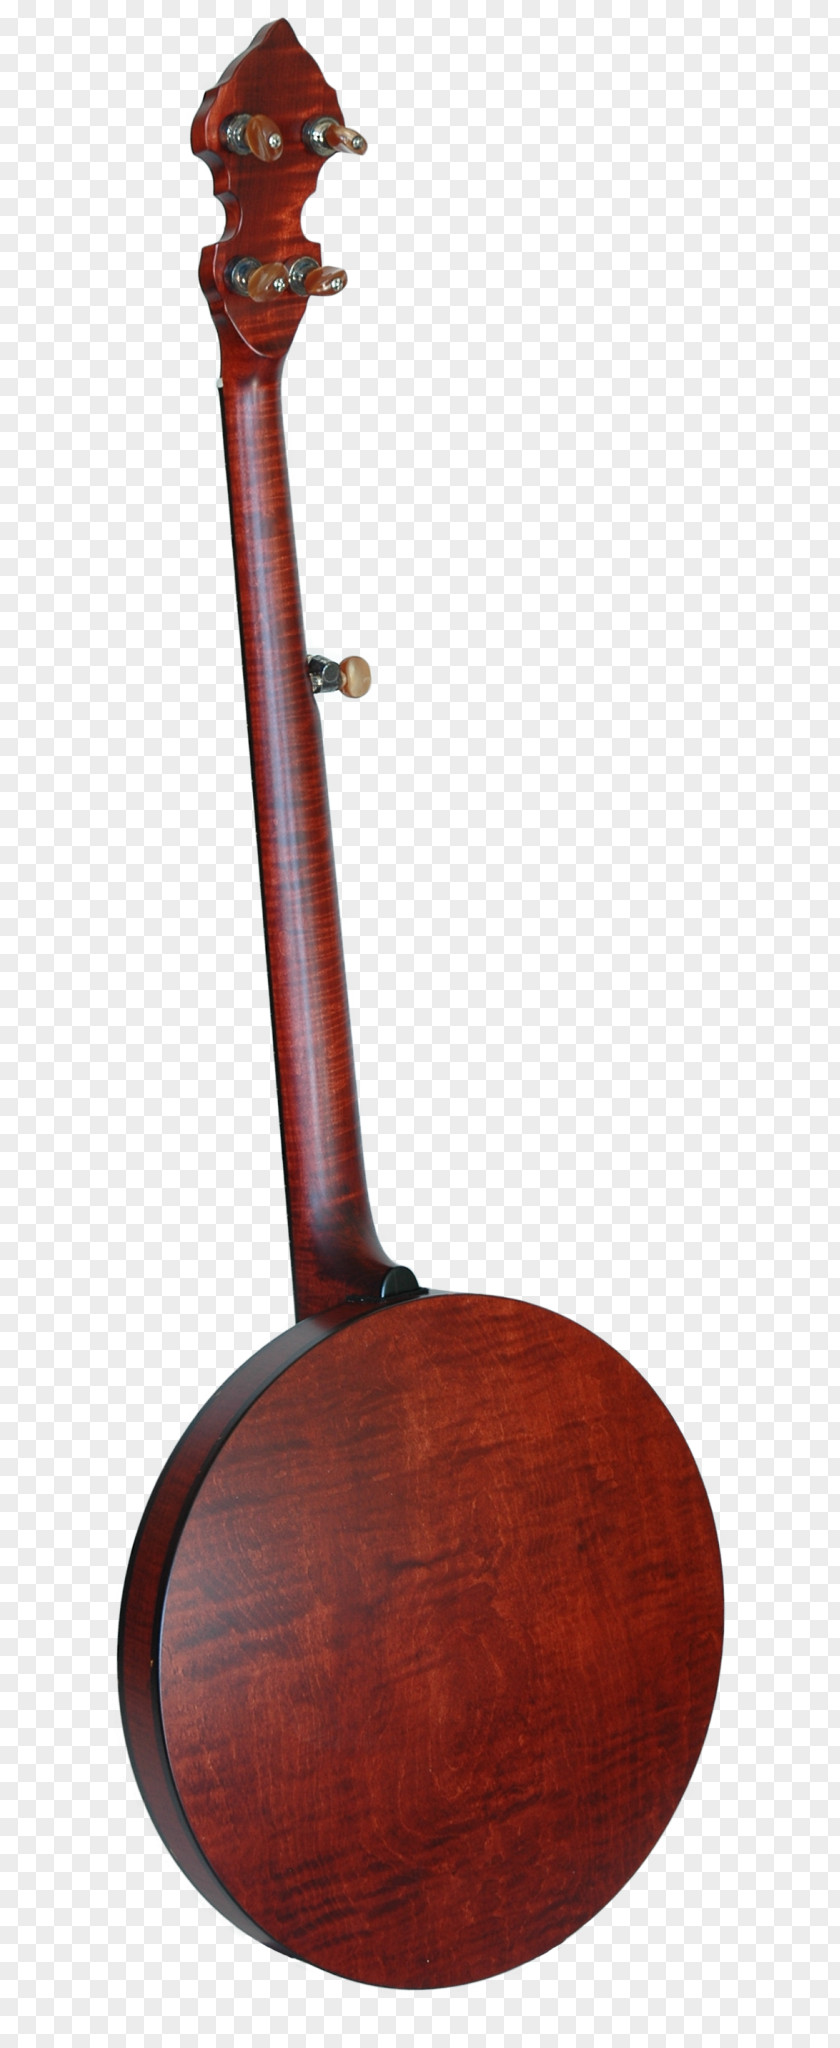 Musical Instruments Banjo Plucked String Instrument Cigar Box Guitar PNG